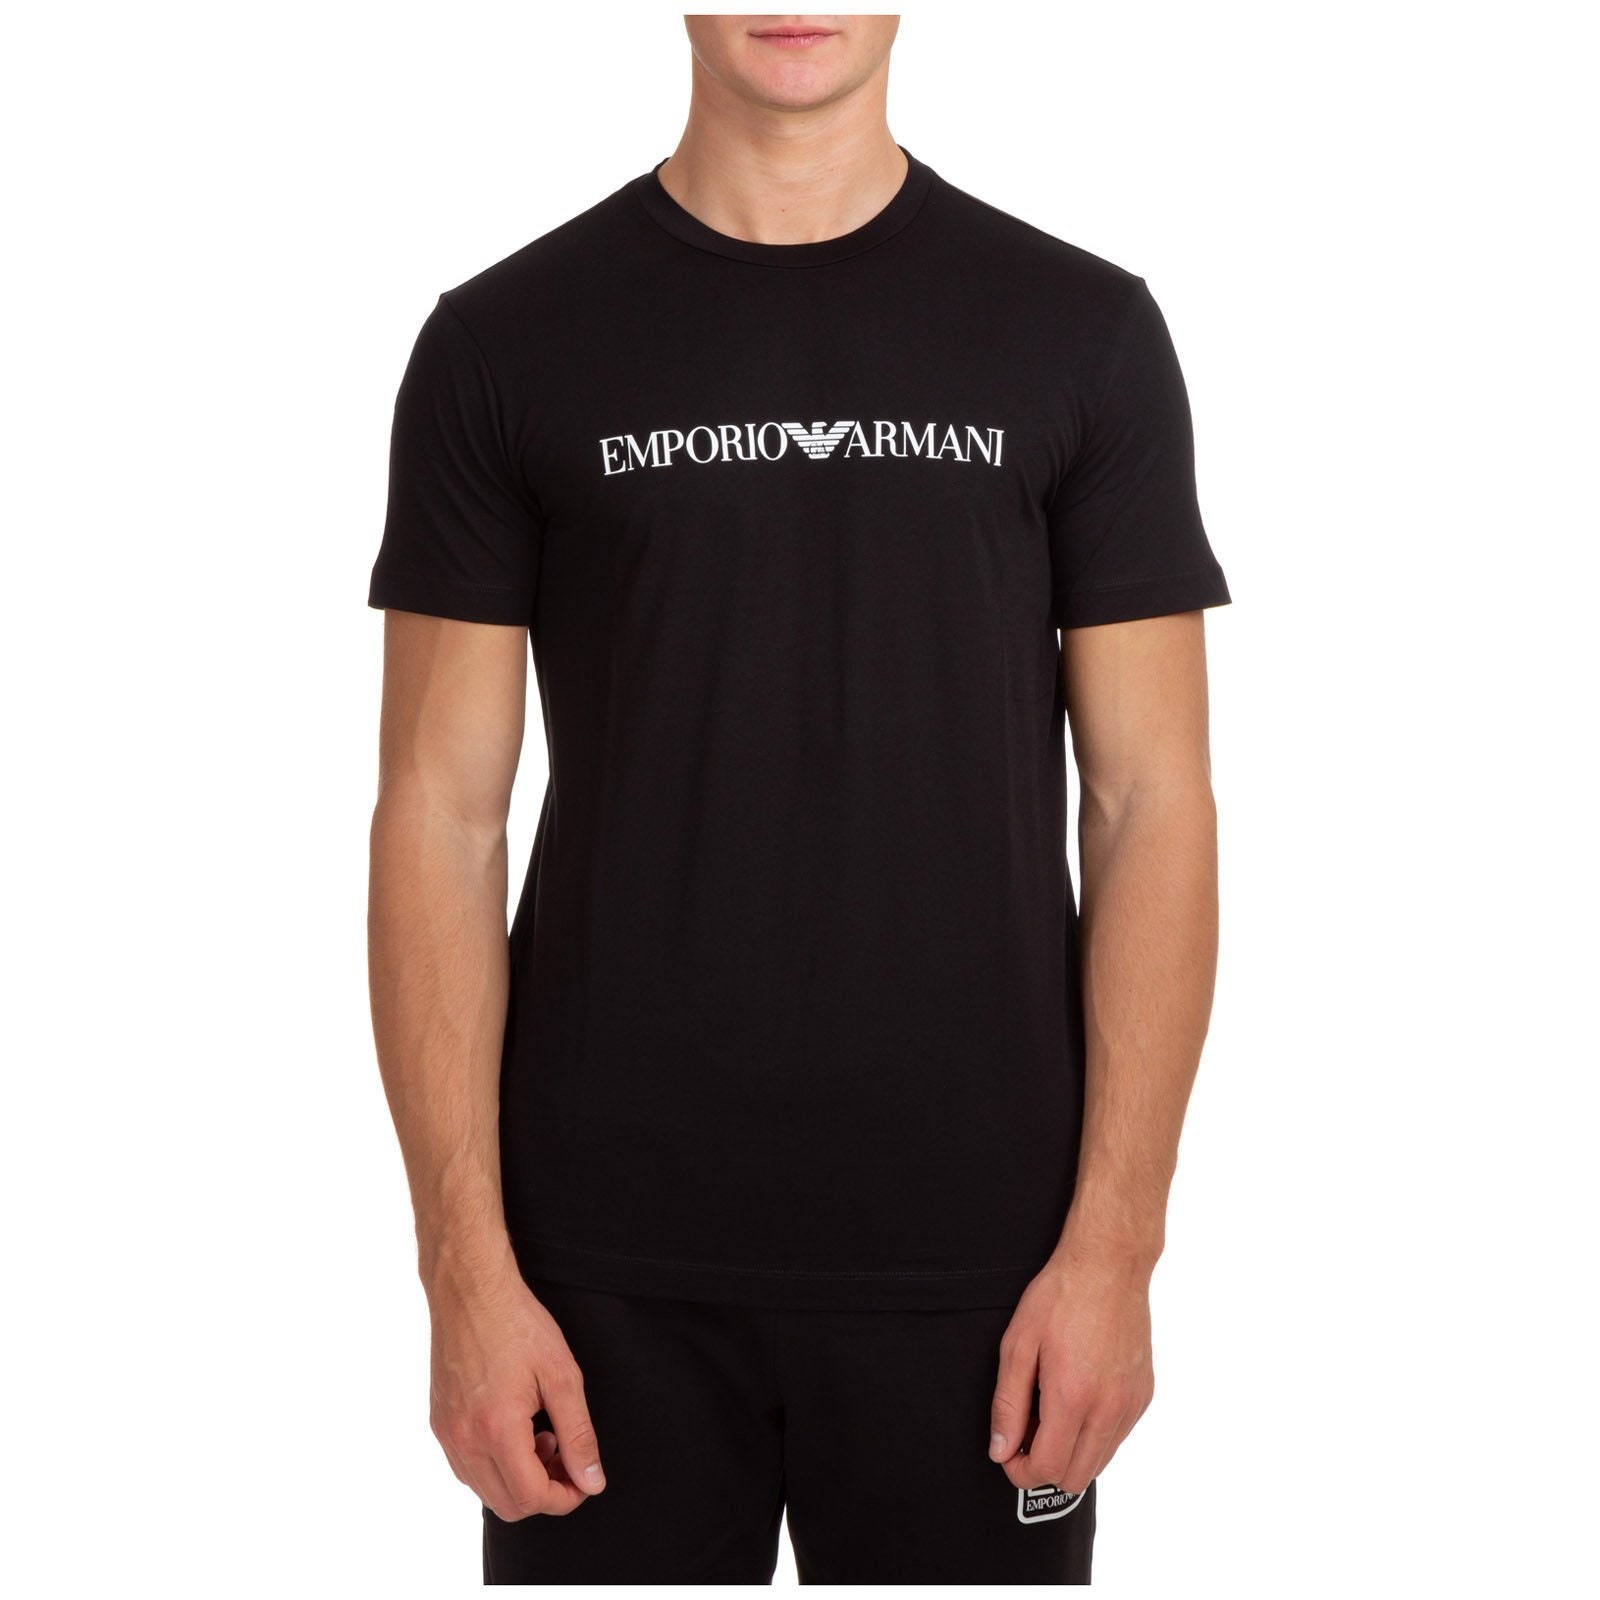 Emporio Armani Shirt - Etsy